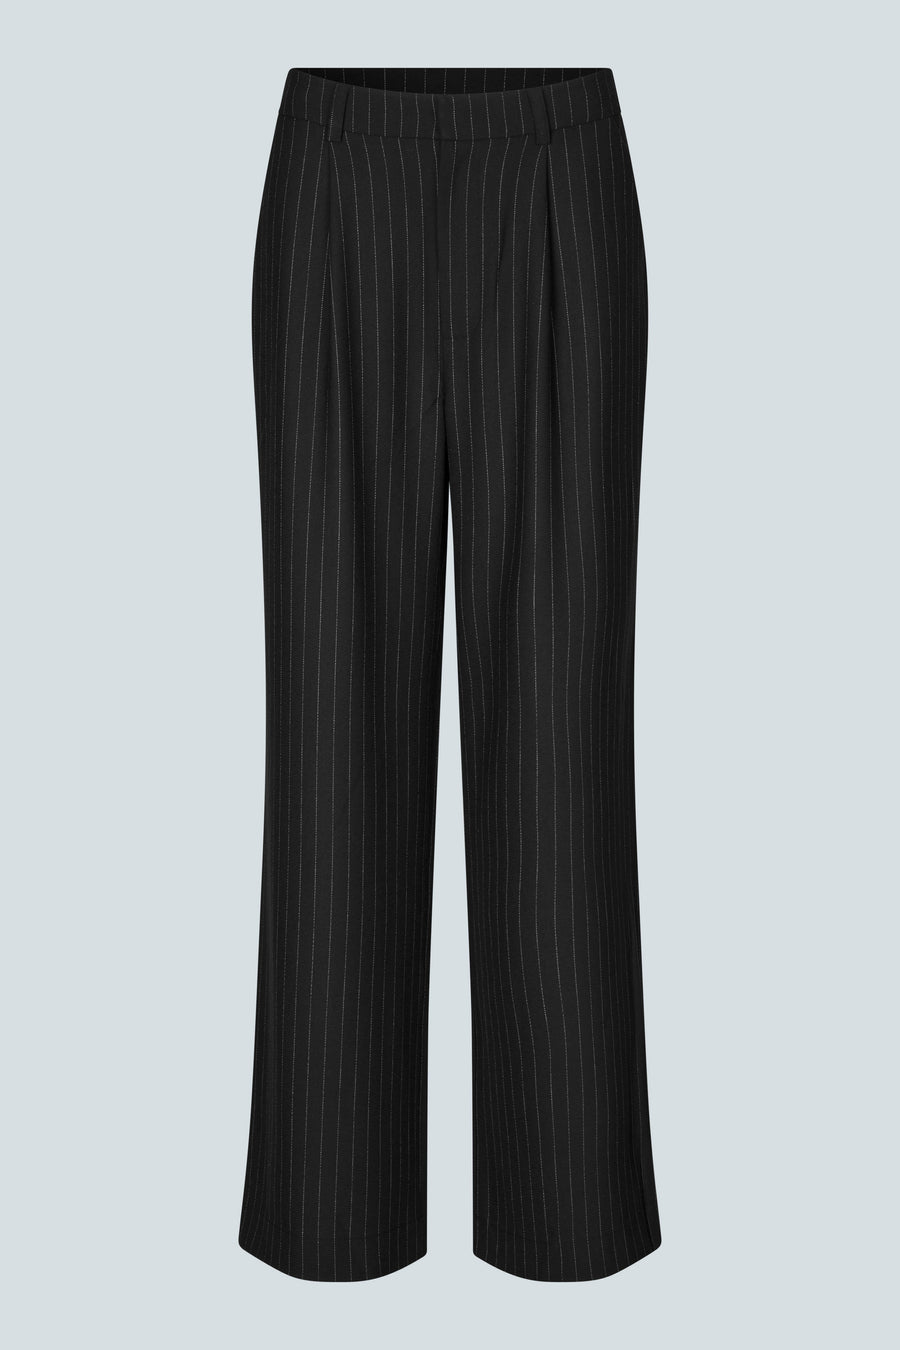 Pacino Trousers